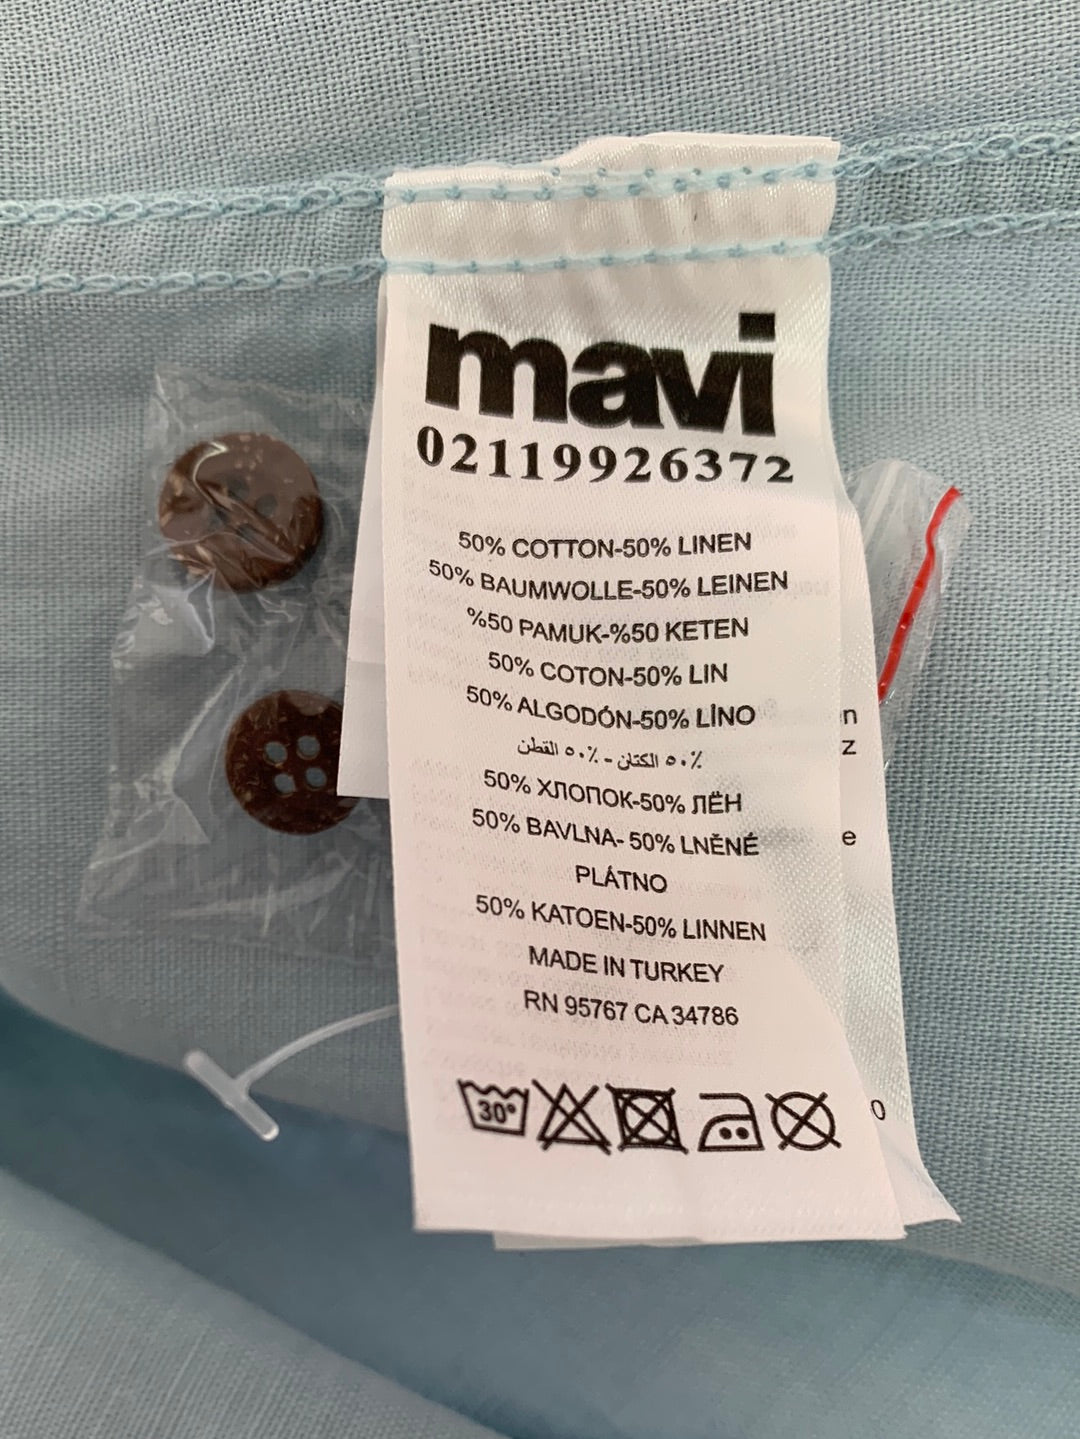 NWT - MAVI blue Linen Cotton Long Sleeve Slim Button Up Shirt - Large